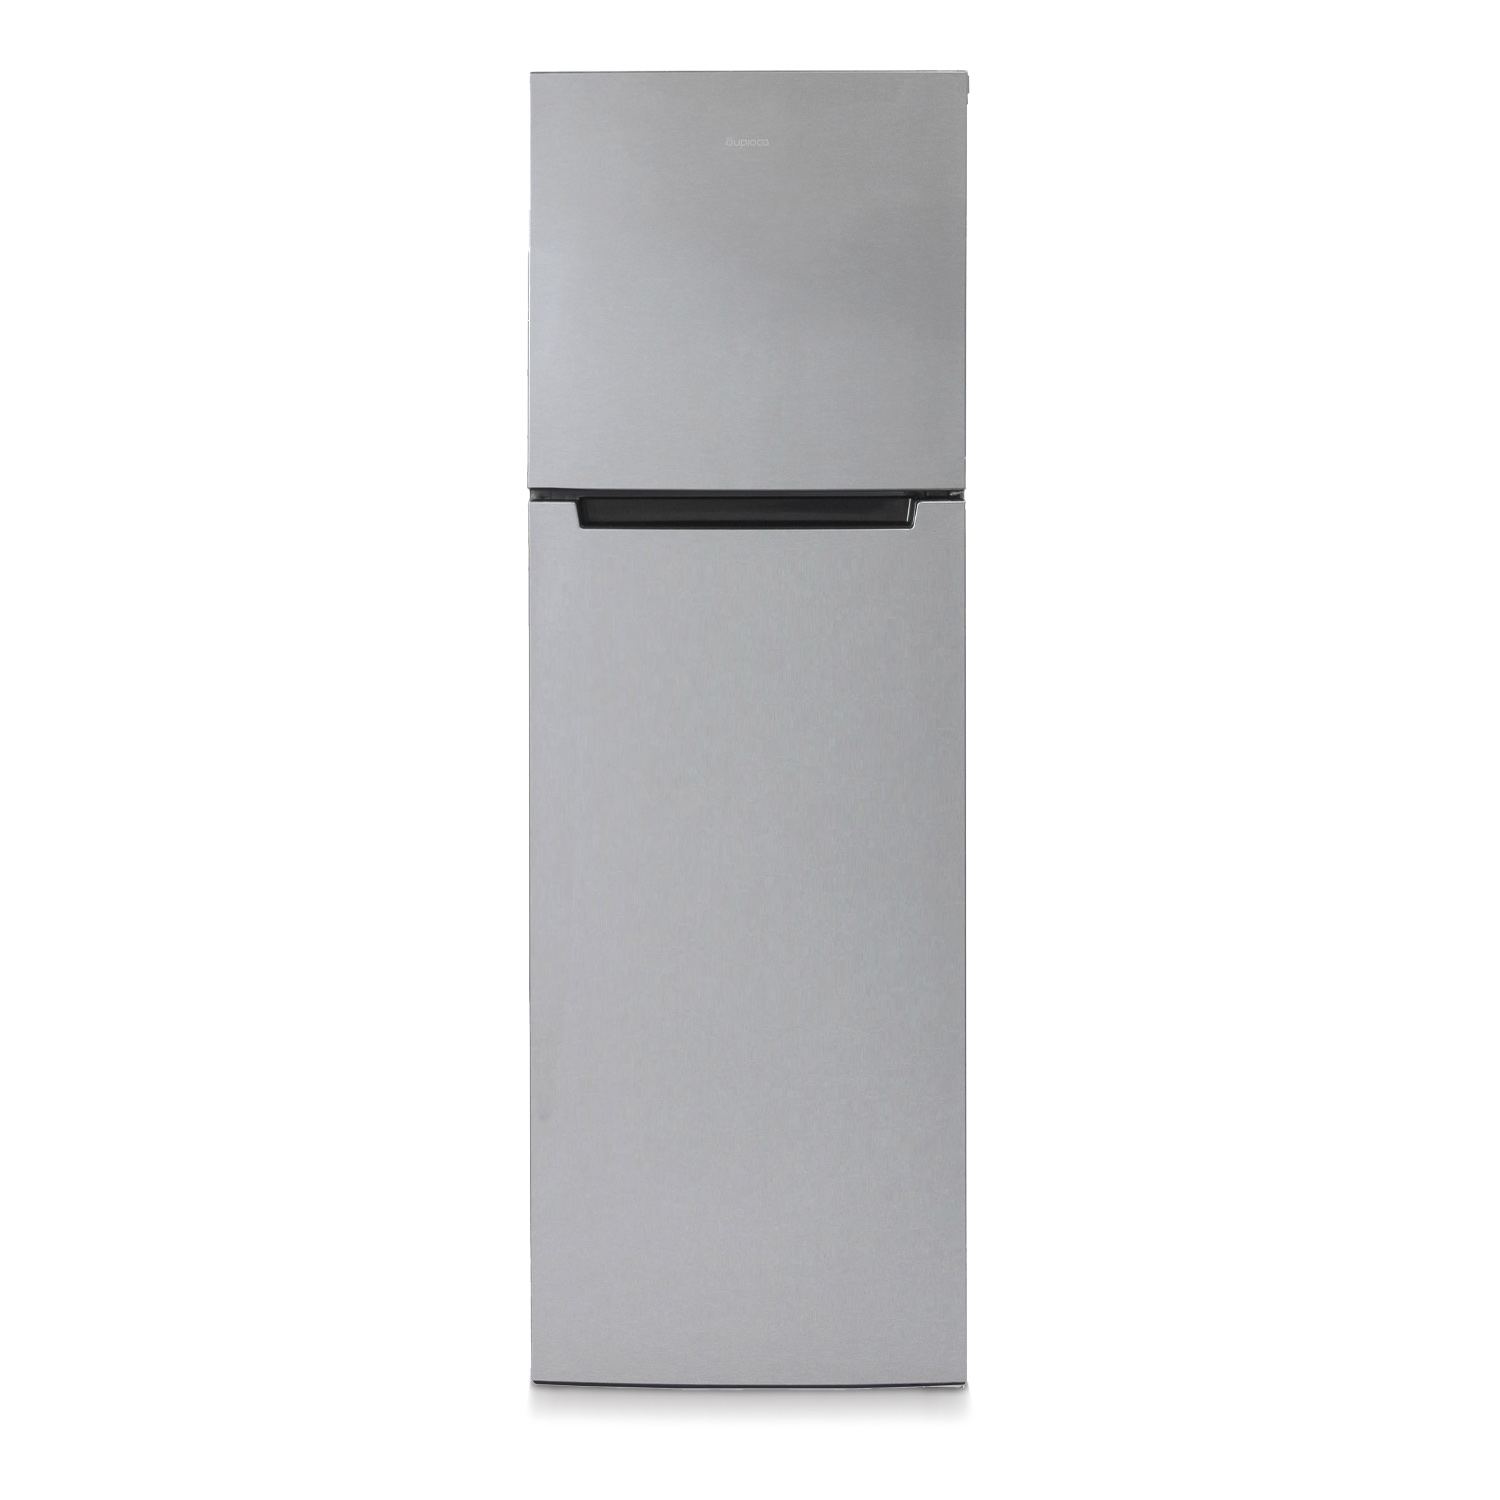 Холодильник Бирюса C6039 серебристый холодильник бирюса m920nf серебристый